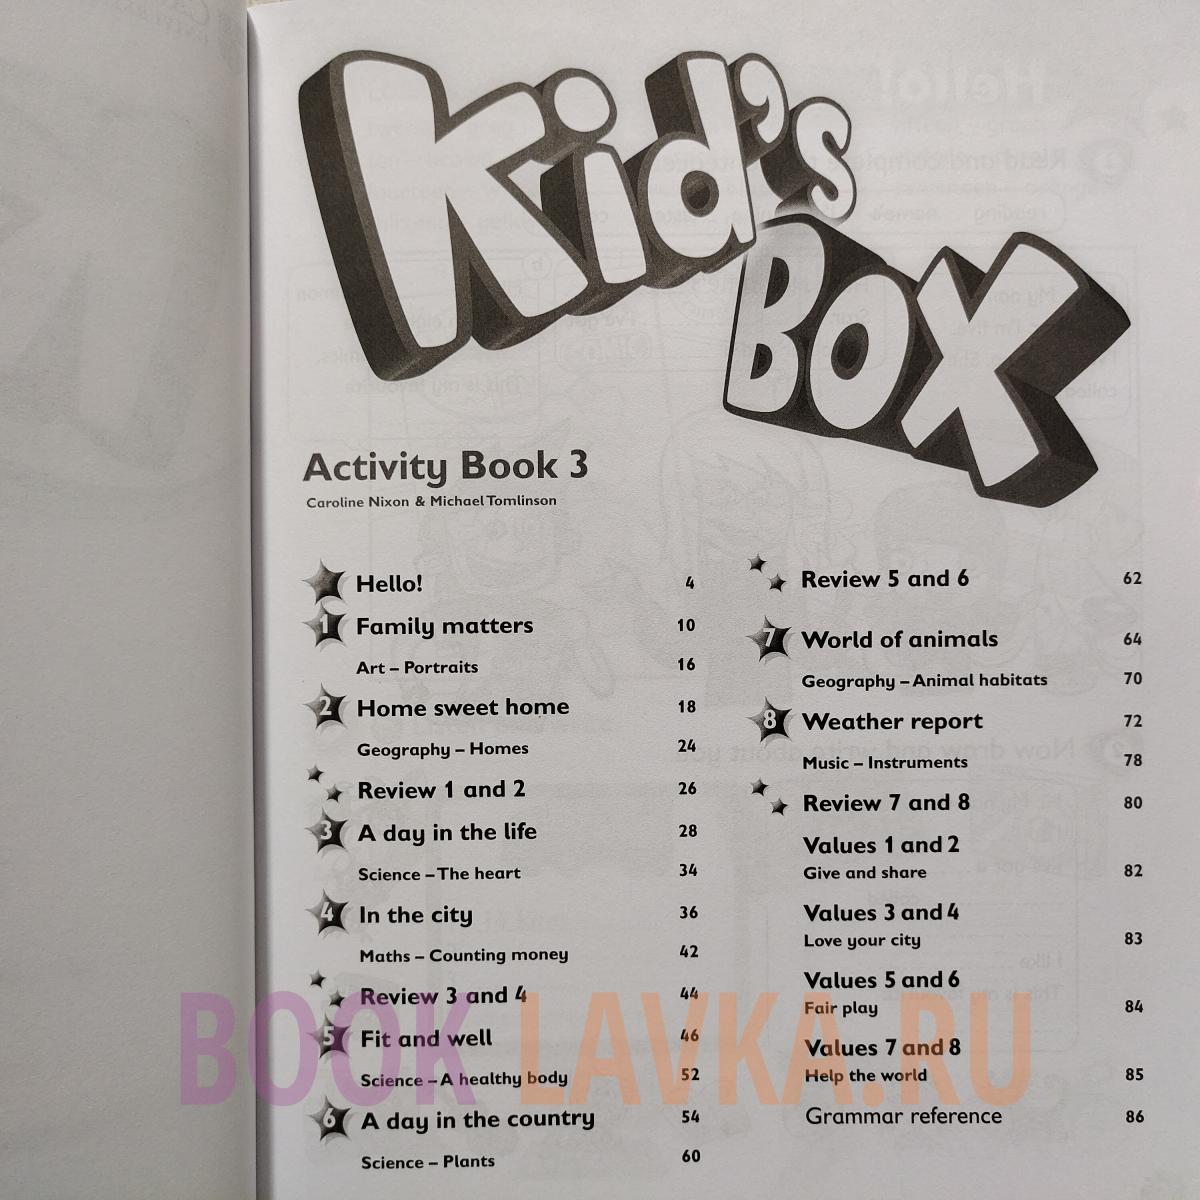 World Club 3 activity book. Kids box activity book ответы